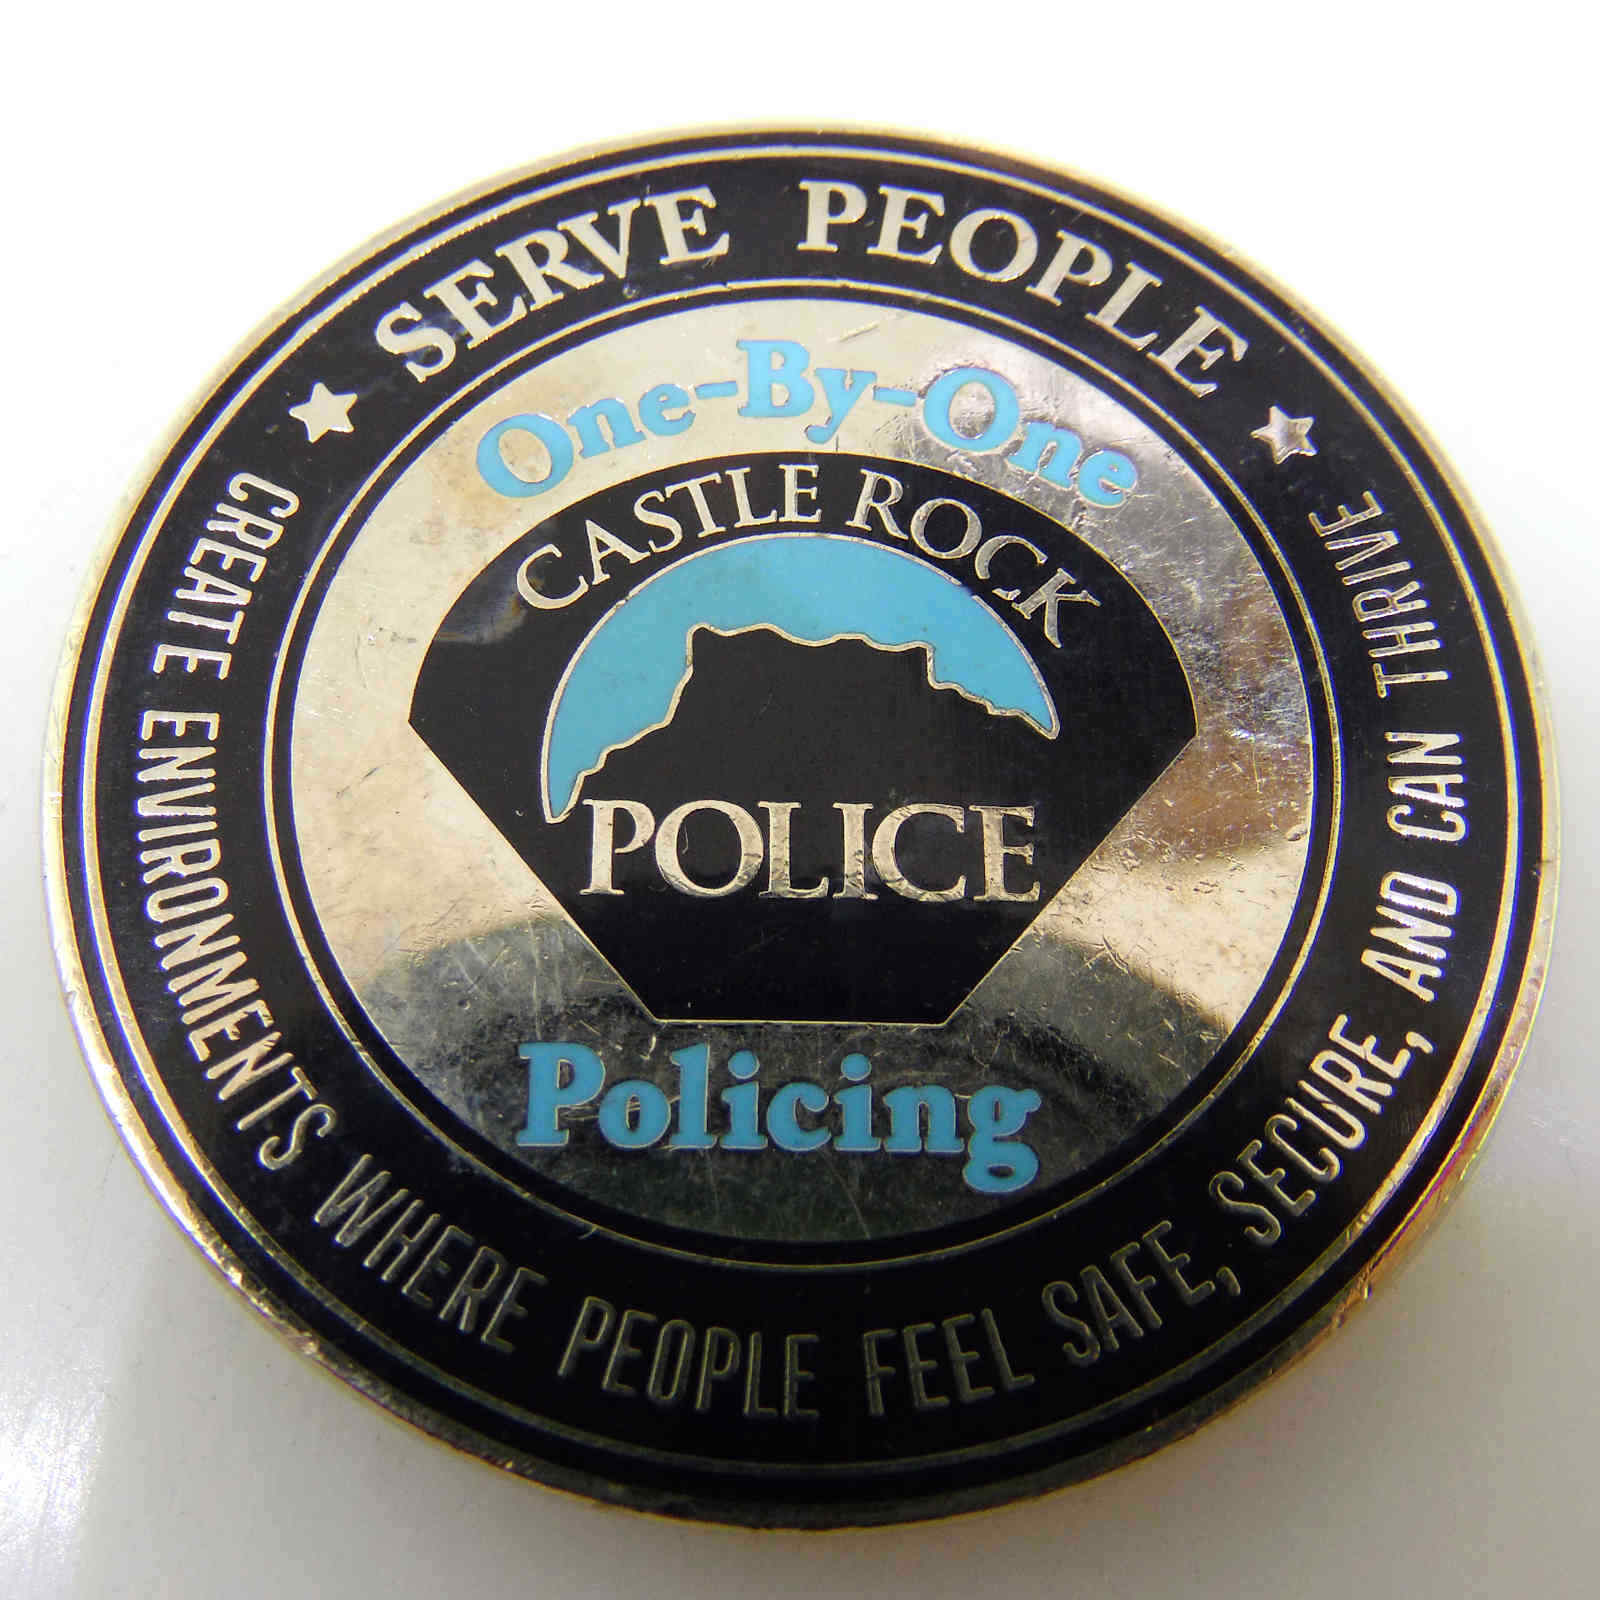 CASTLE ROCK POLICE SERVE PEOPLE CHALLENGE COIN